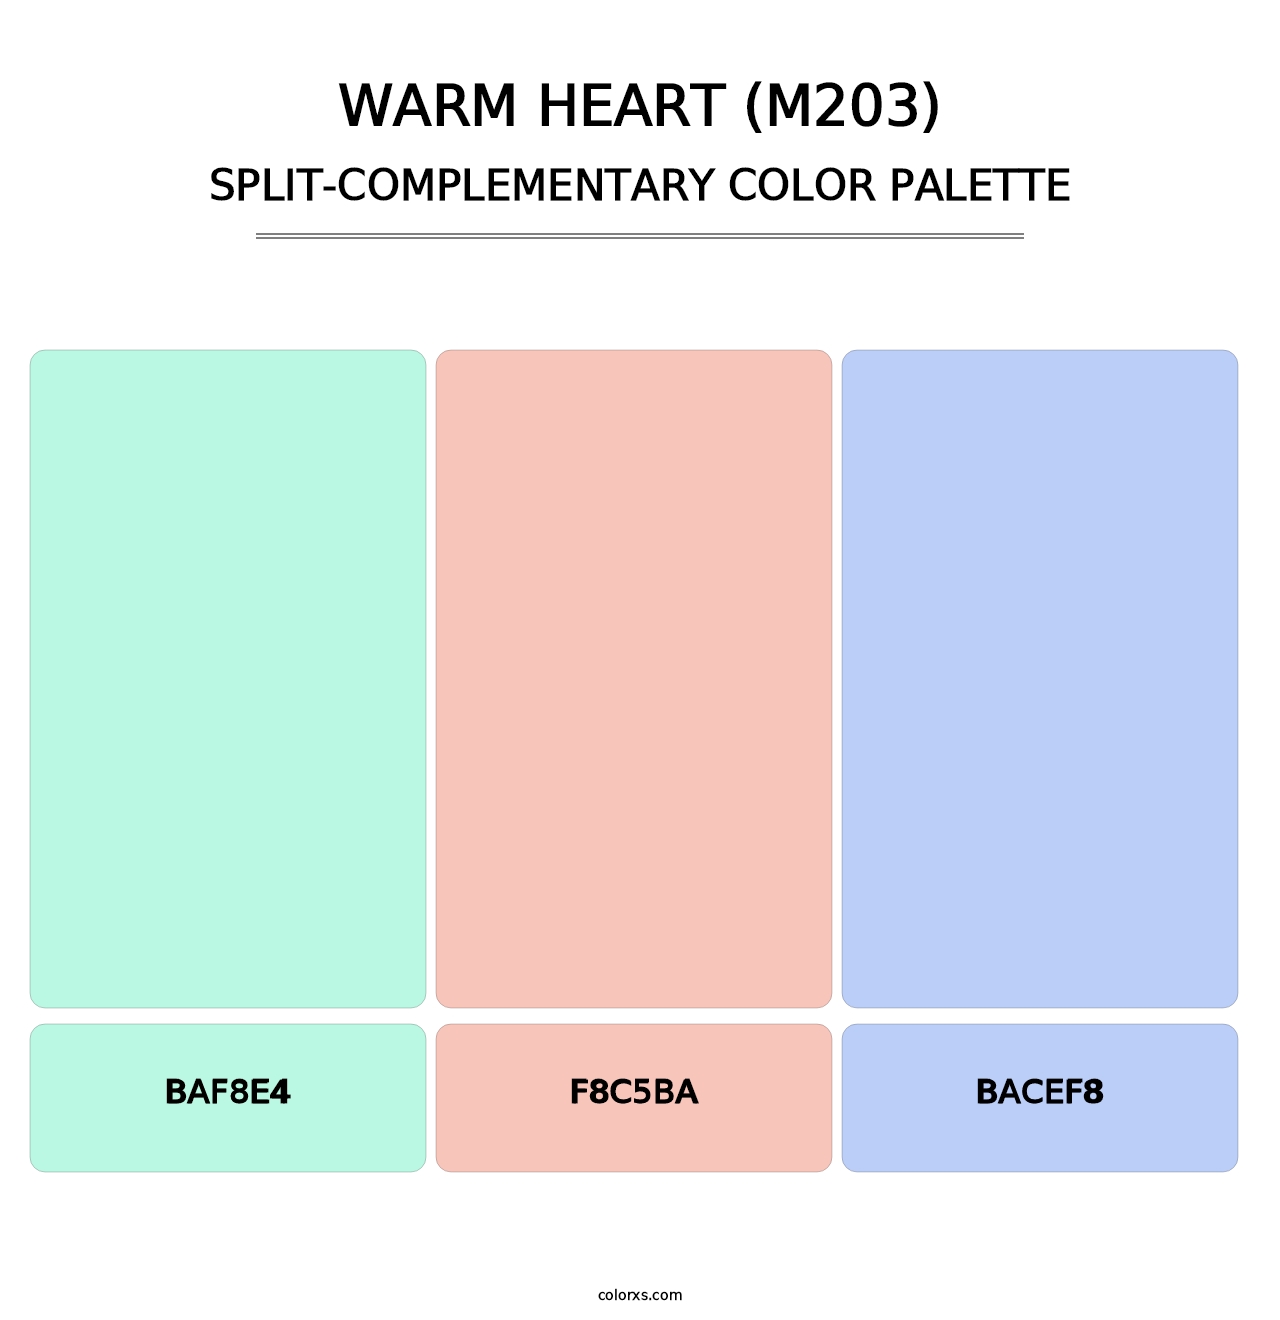 Warm Heart (M203) - Split-Complementary Color Palette